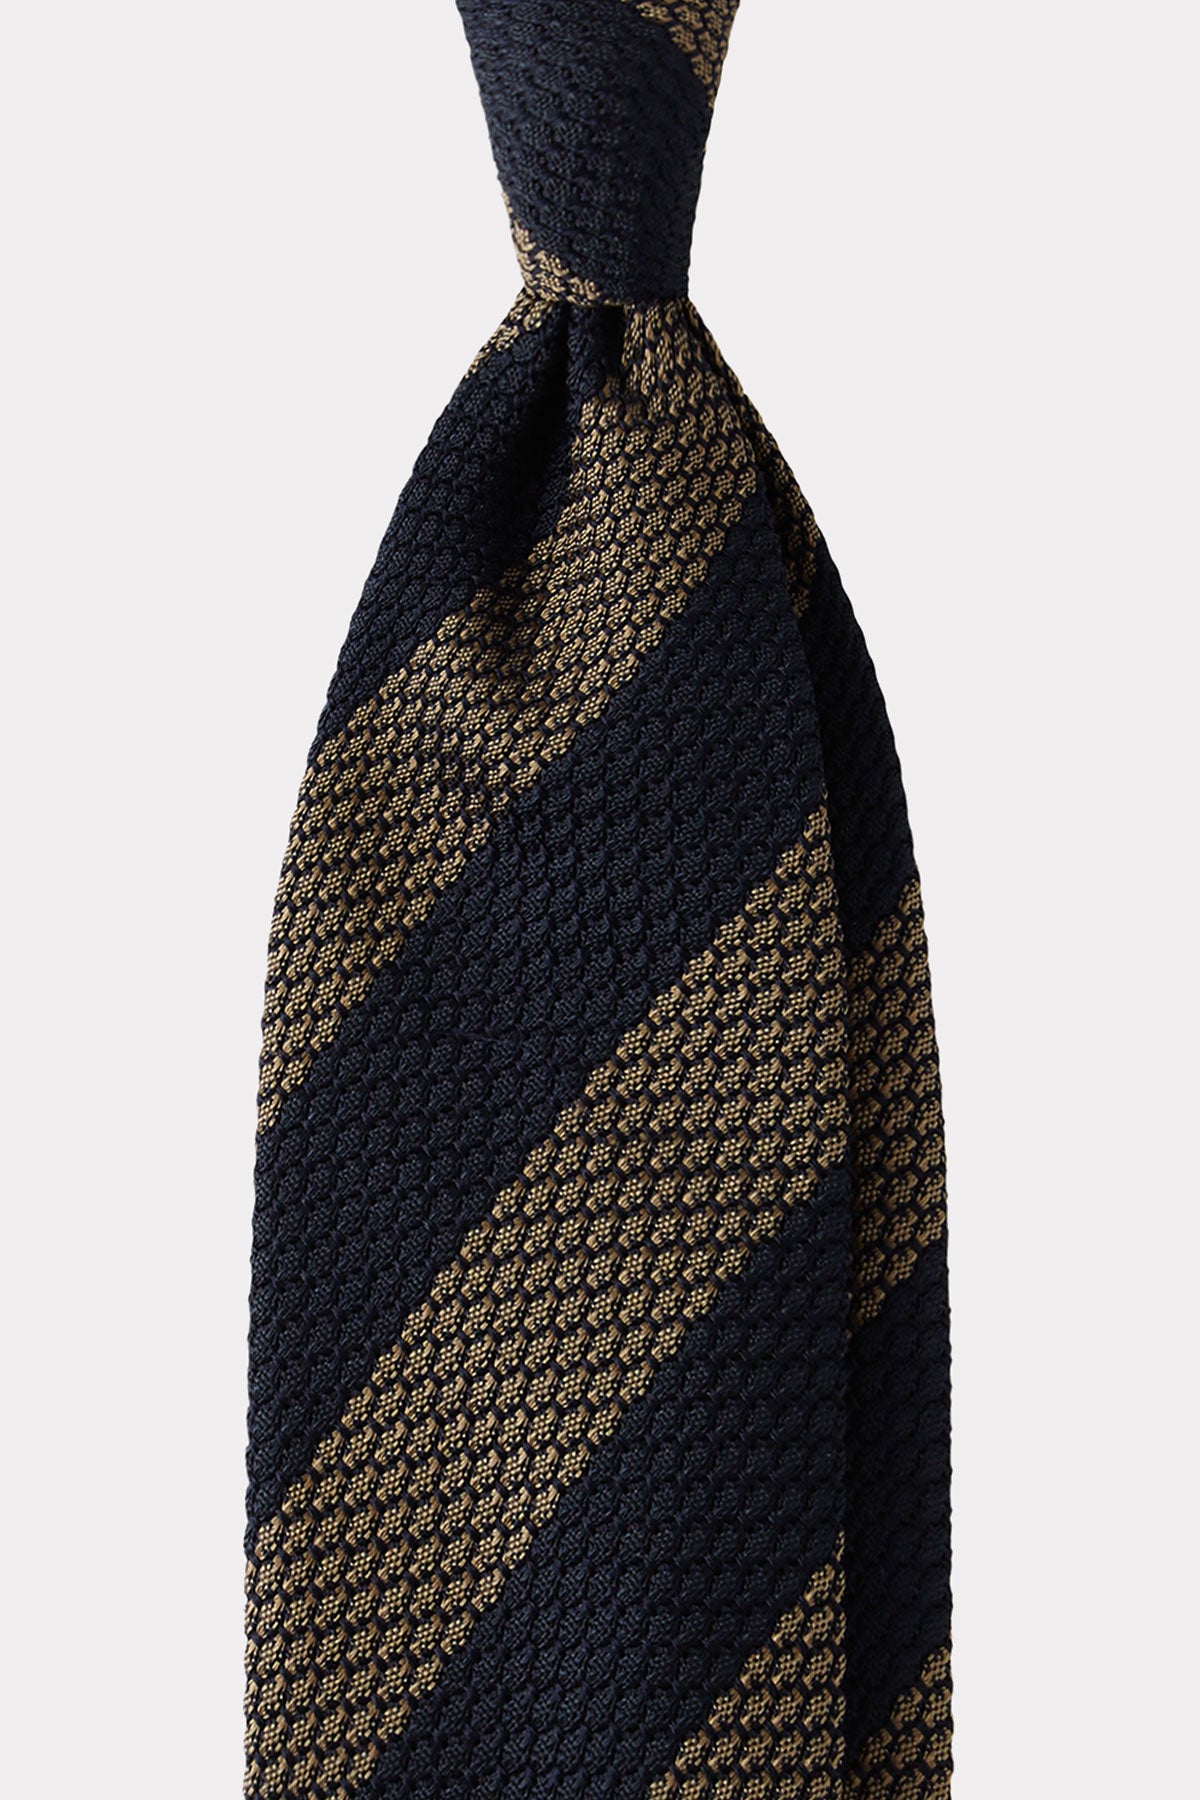 Krawatte in marine-beige gestreift